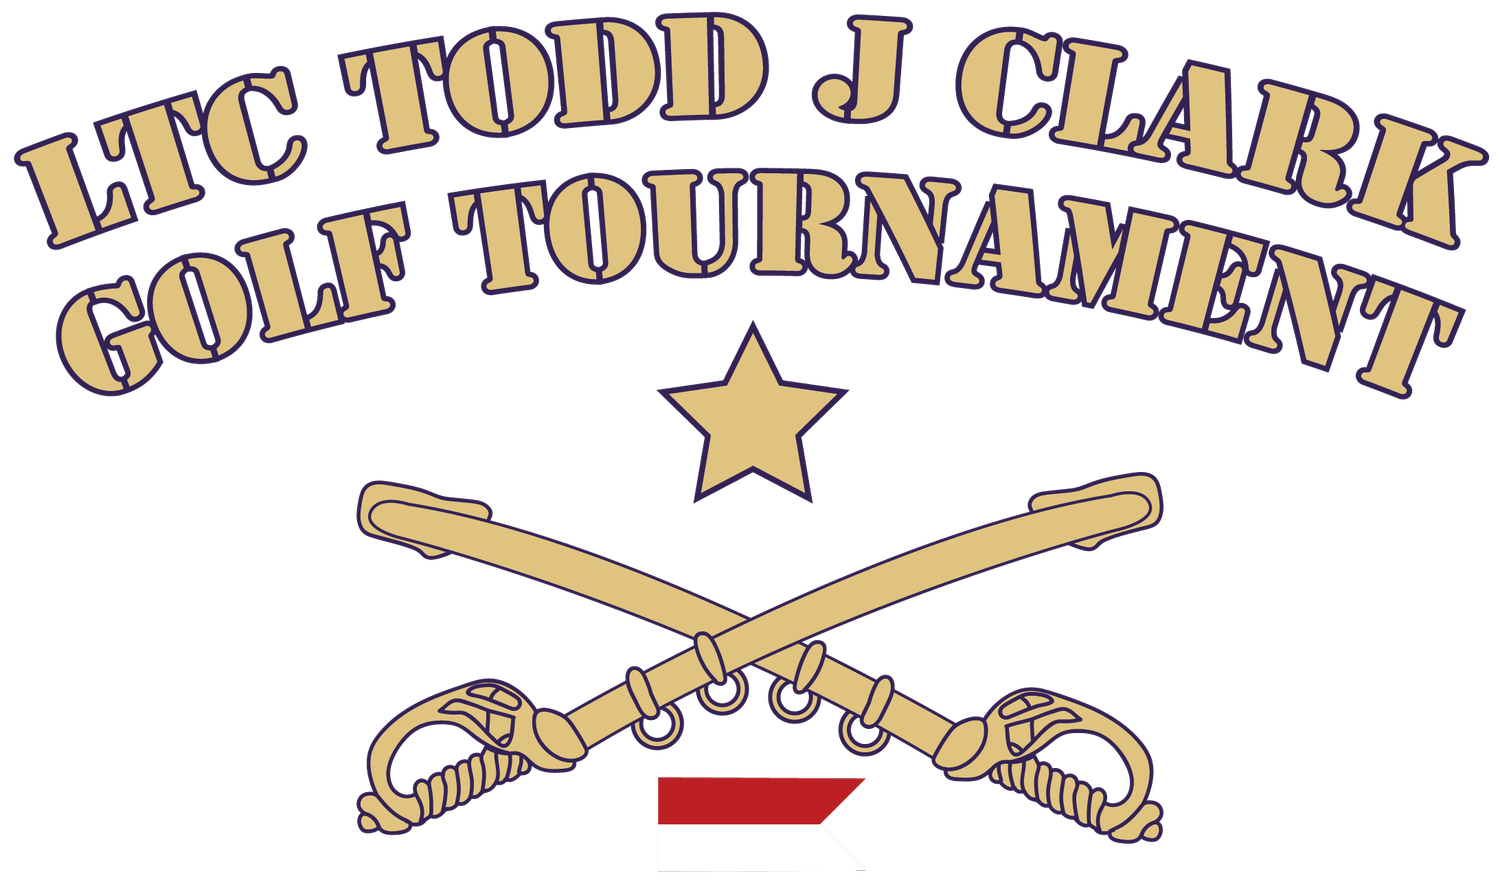 LTC Todd Clark Memorial Golf Tournament